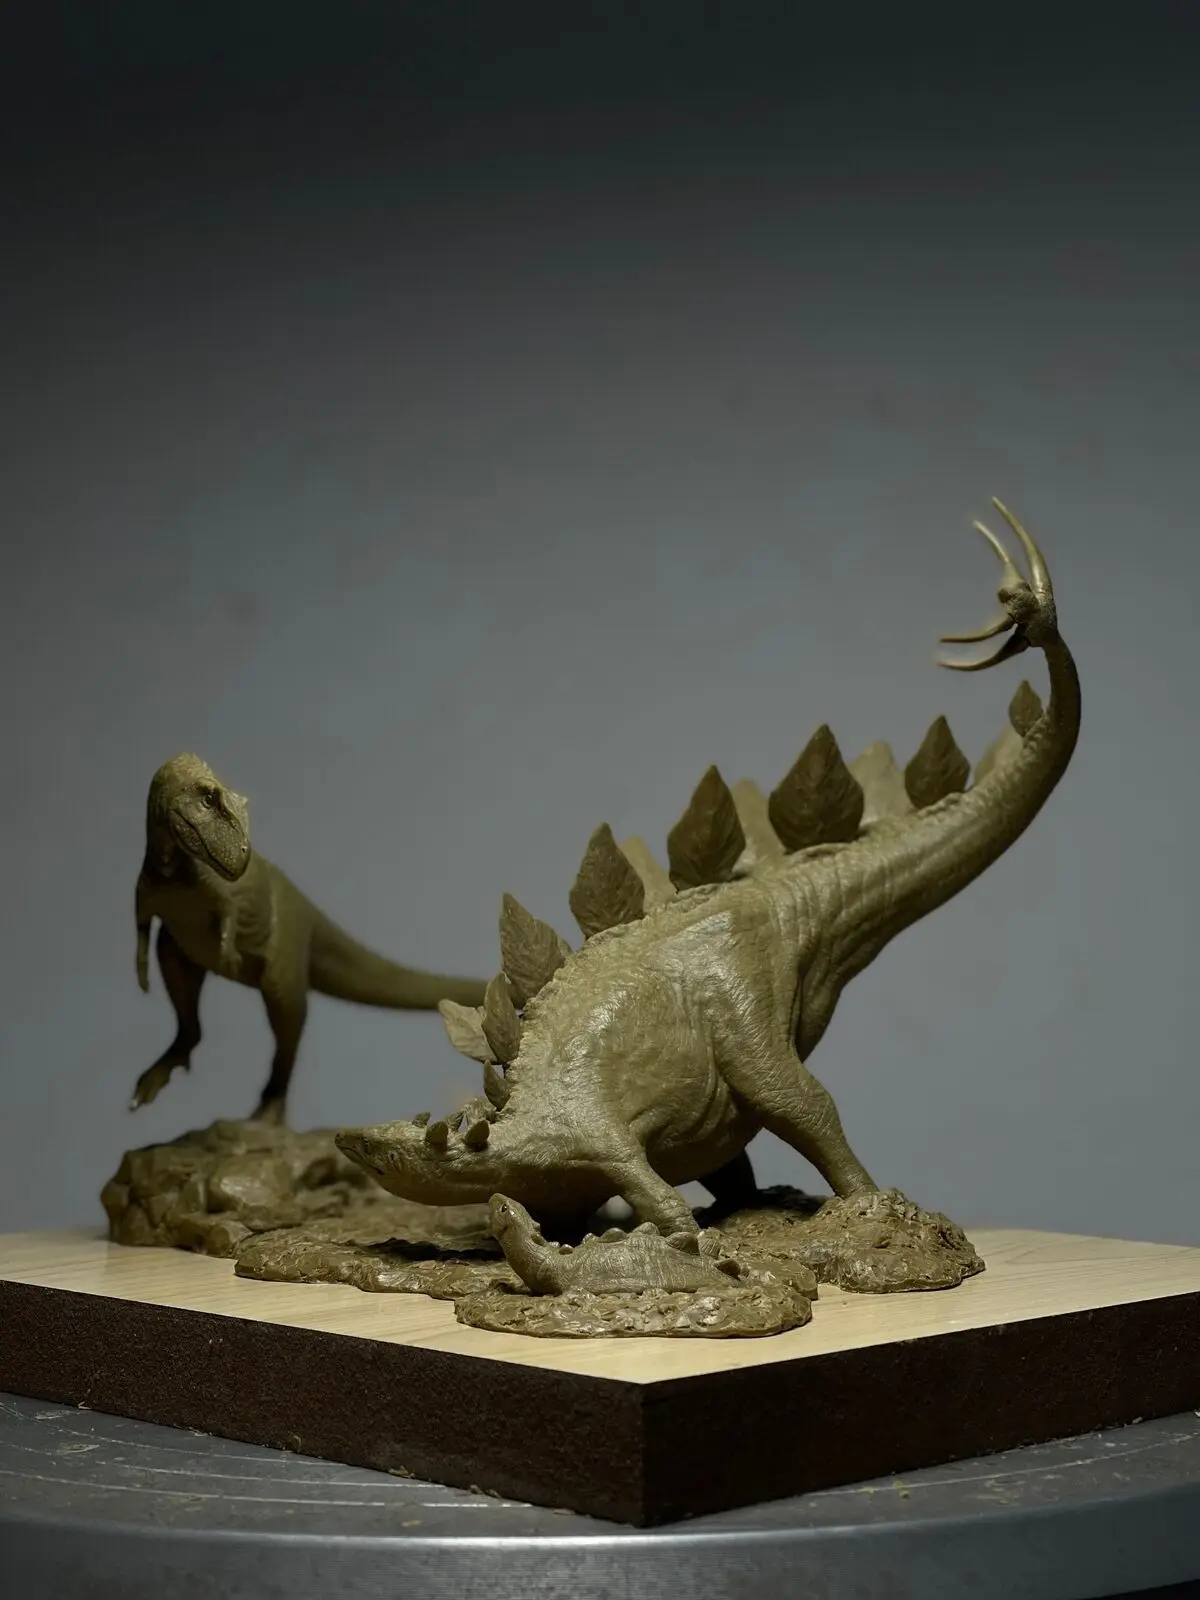 

Sensen 1/64 Allosaurus VS Stegosaurus Scene Statue Dinosaur Animal Collector Desk Decoration Display Adult GK Birthday Gift Toy